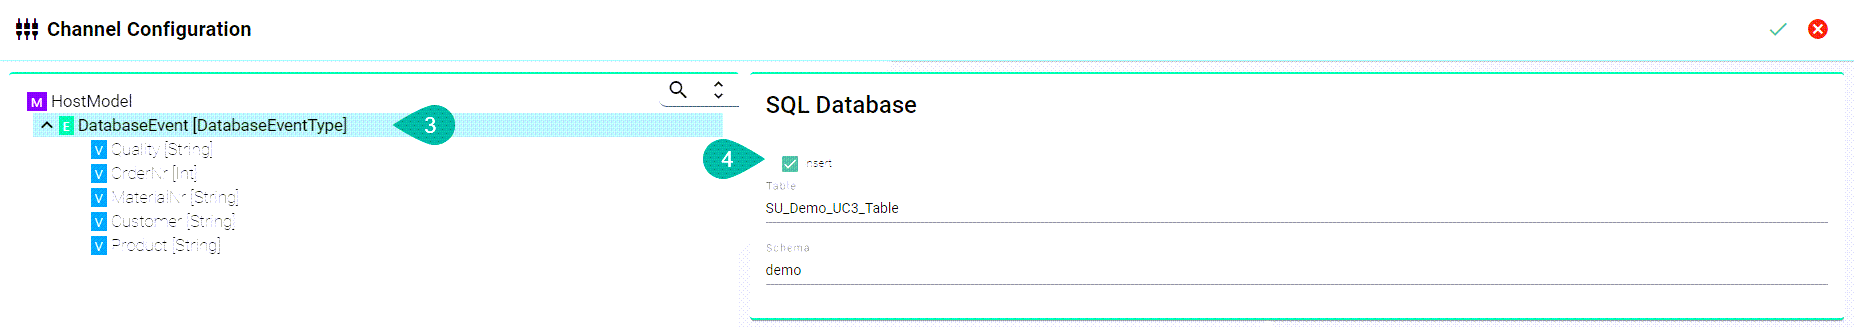 SQL Database Configuration Insert